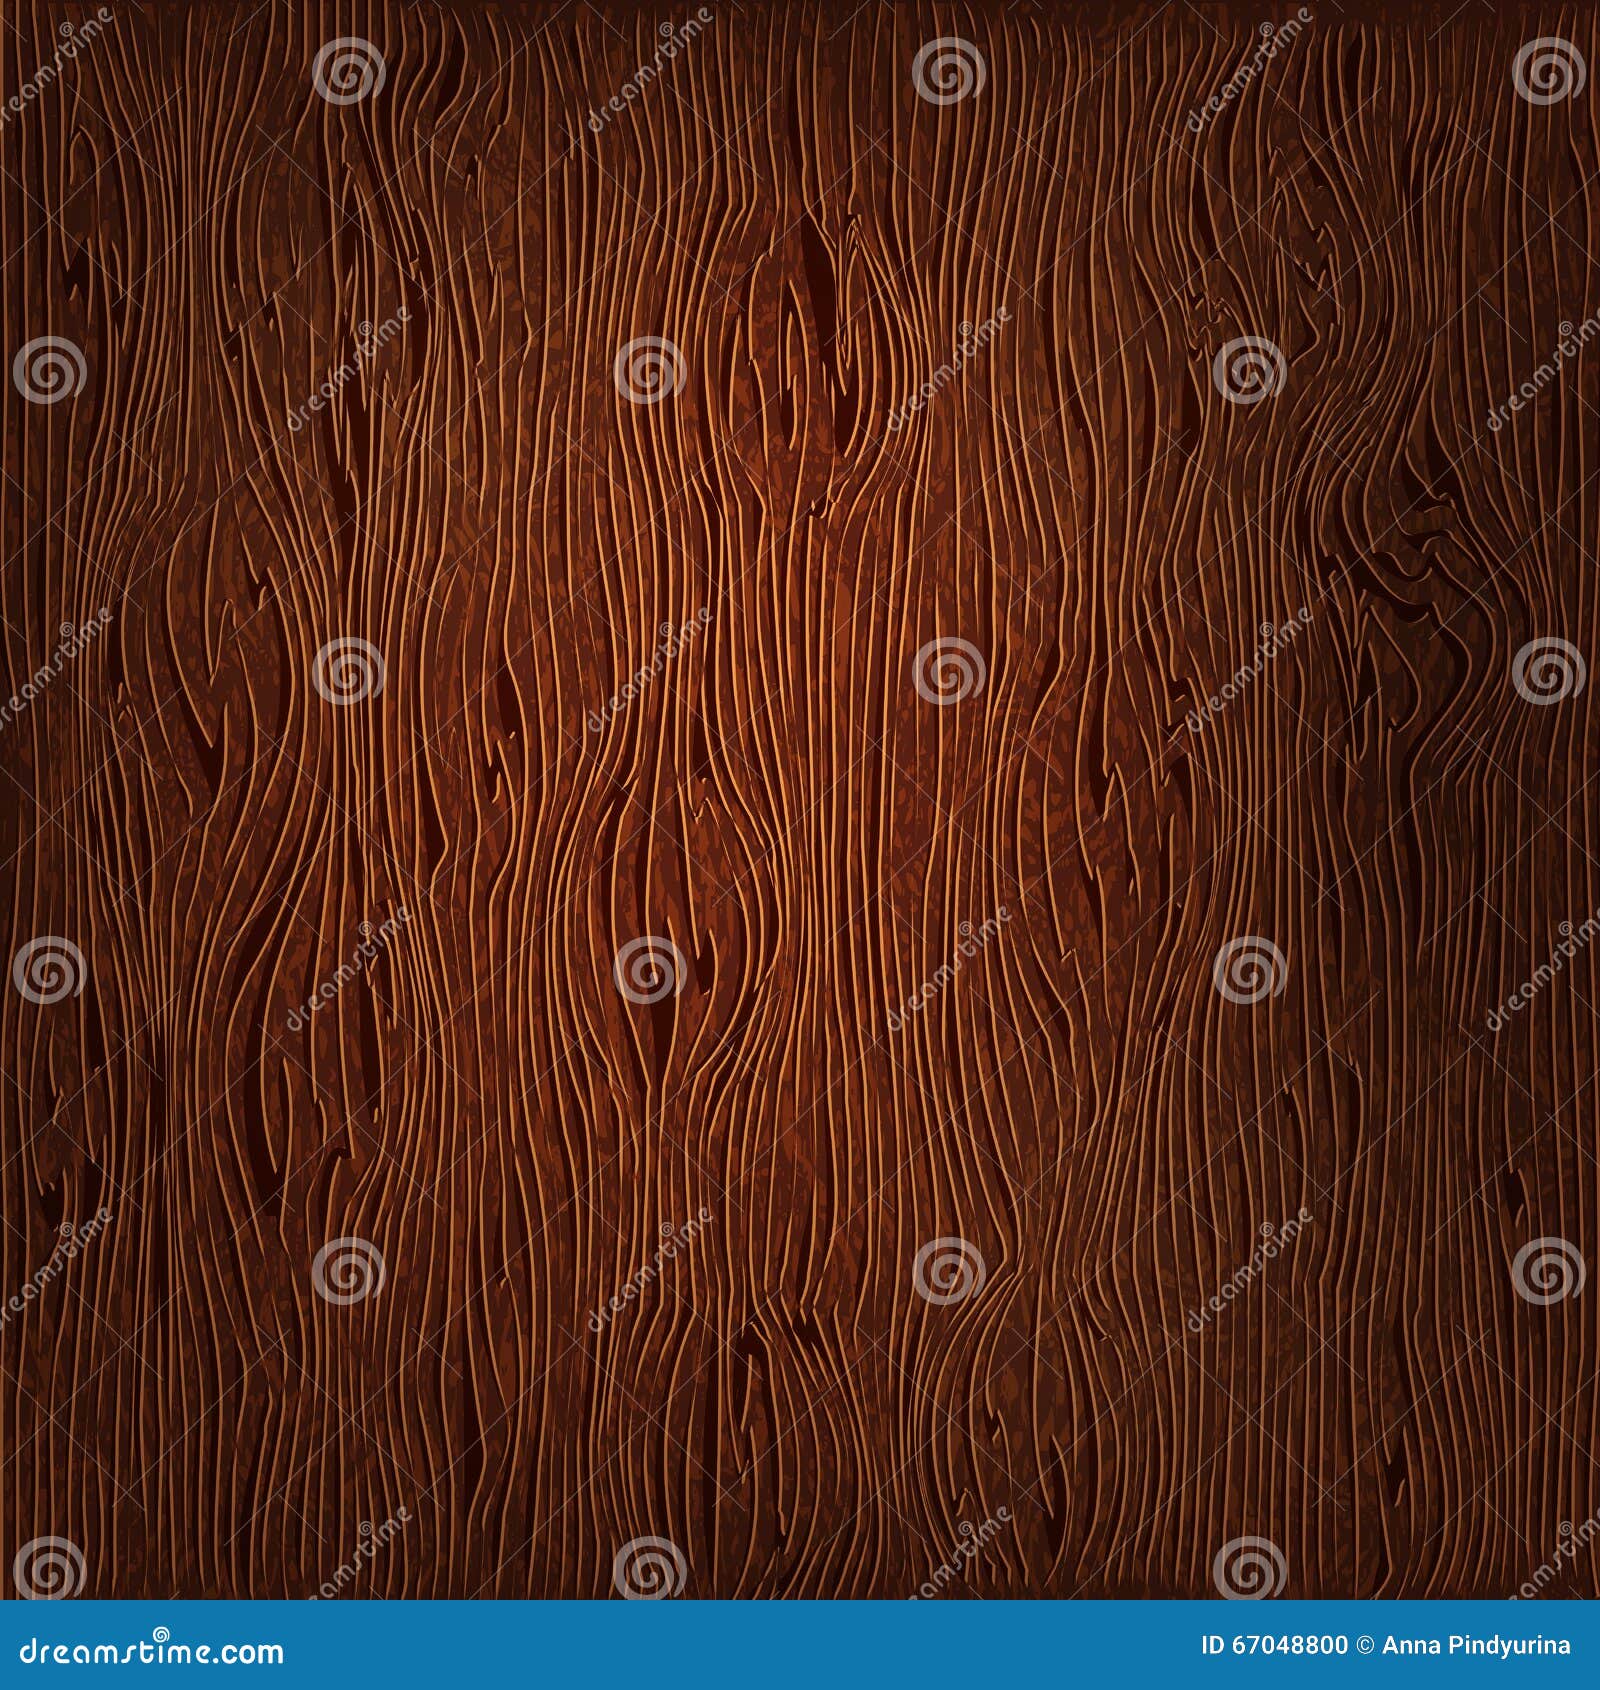 Blanket Wood Texture Seamless Sketch. Grain cover surface. Wooden fibers.  Vector illustration isolated on white background - Nikkel-Art.co.uk